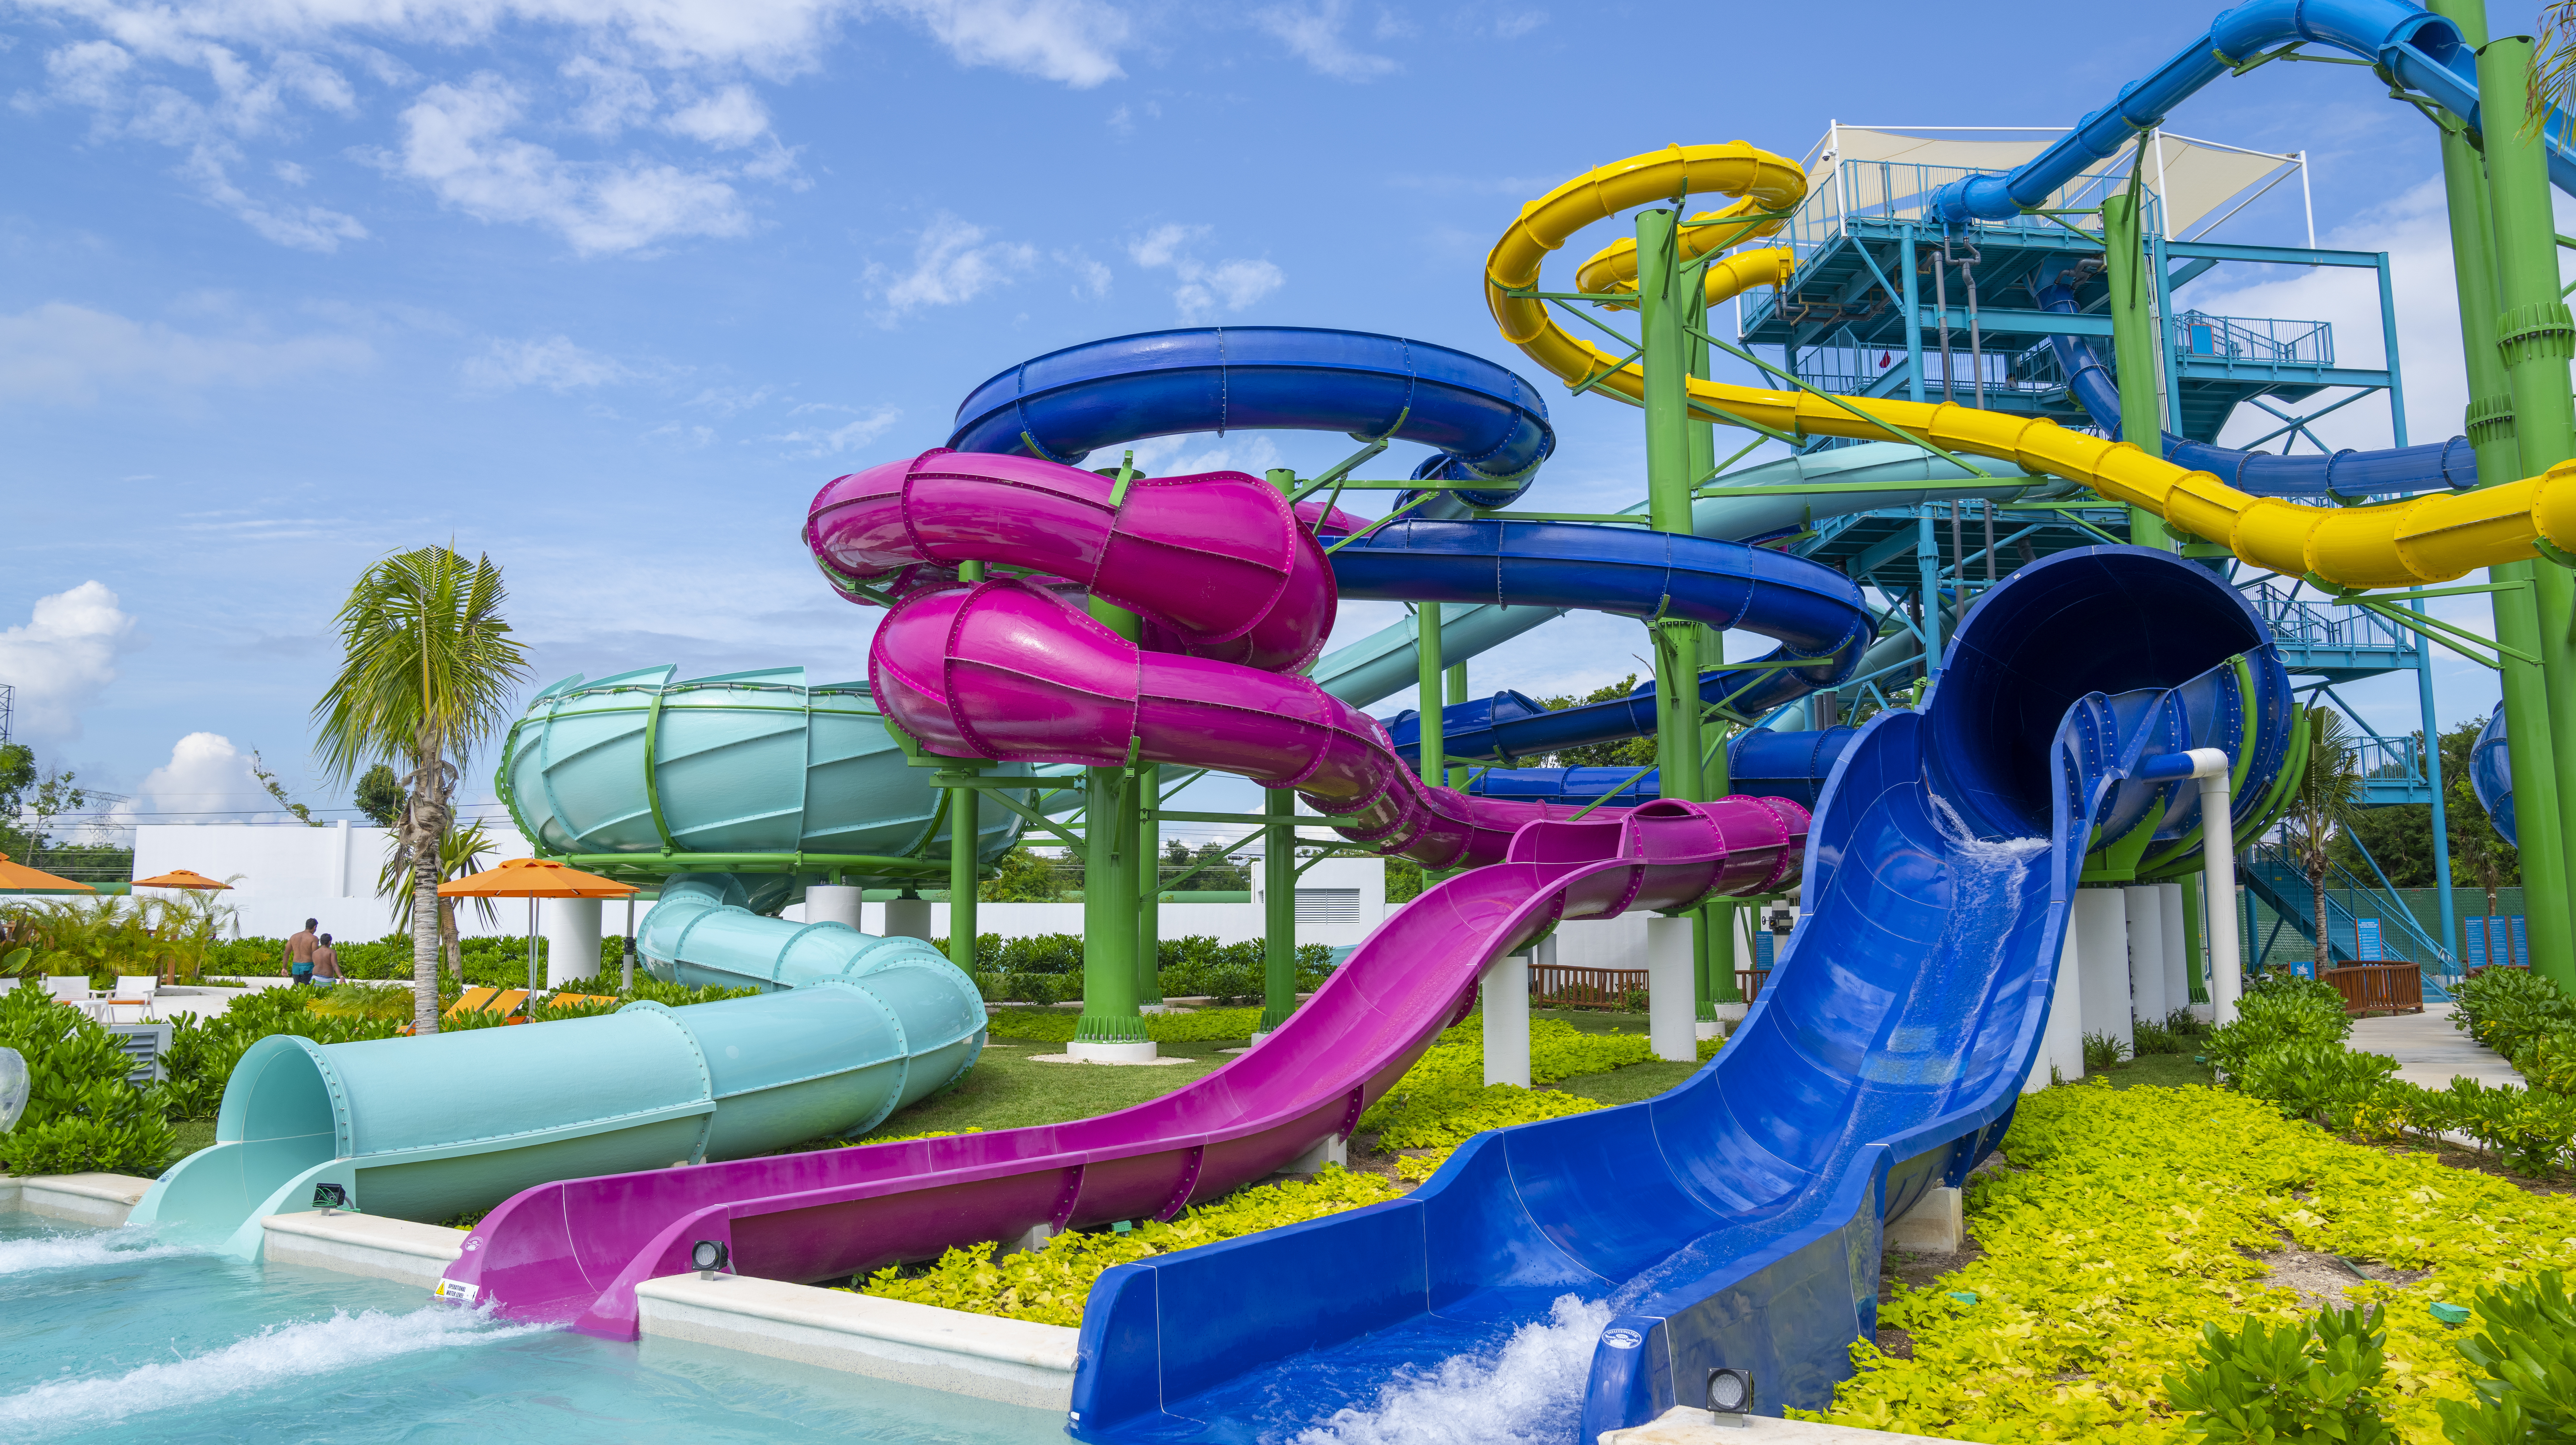 Slide-Tower-Aqua-Nick-at-Nickelodeon-Hotel-and-Resort-Cancun-Mexico-Photo12